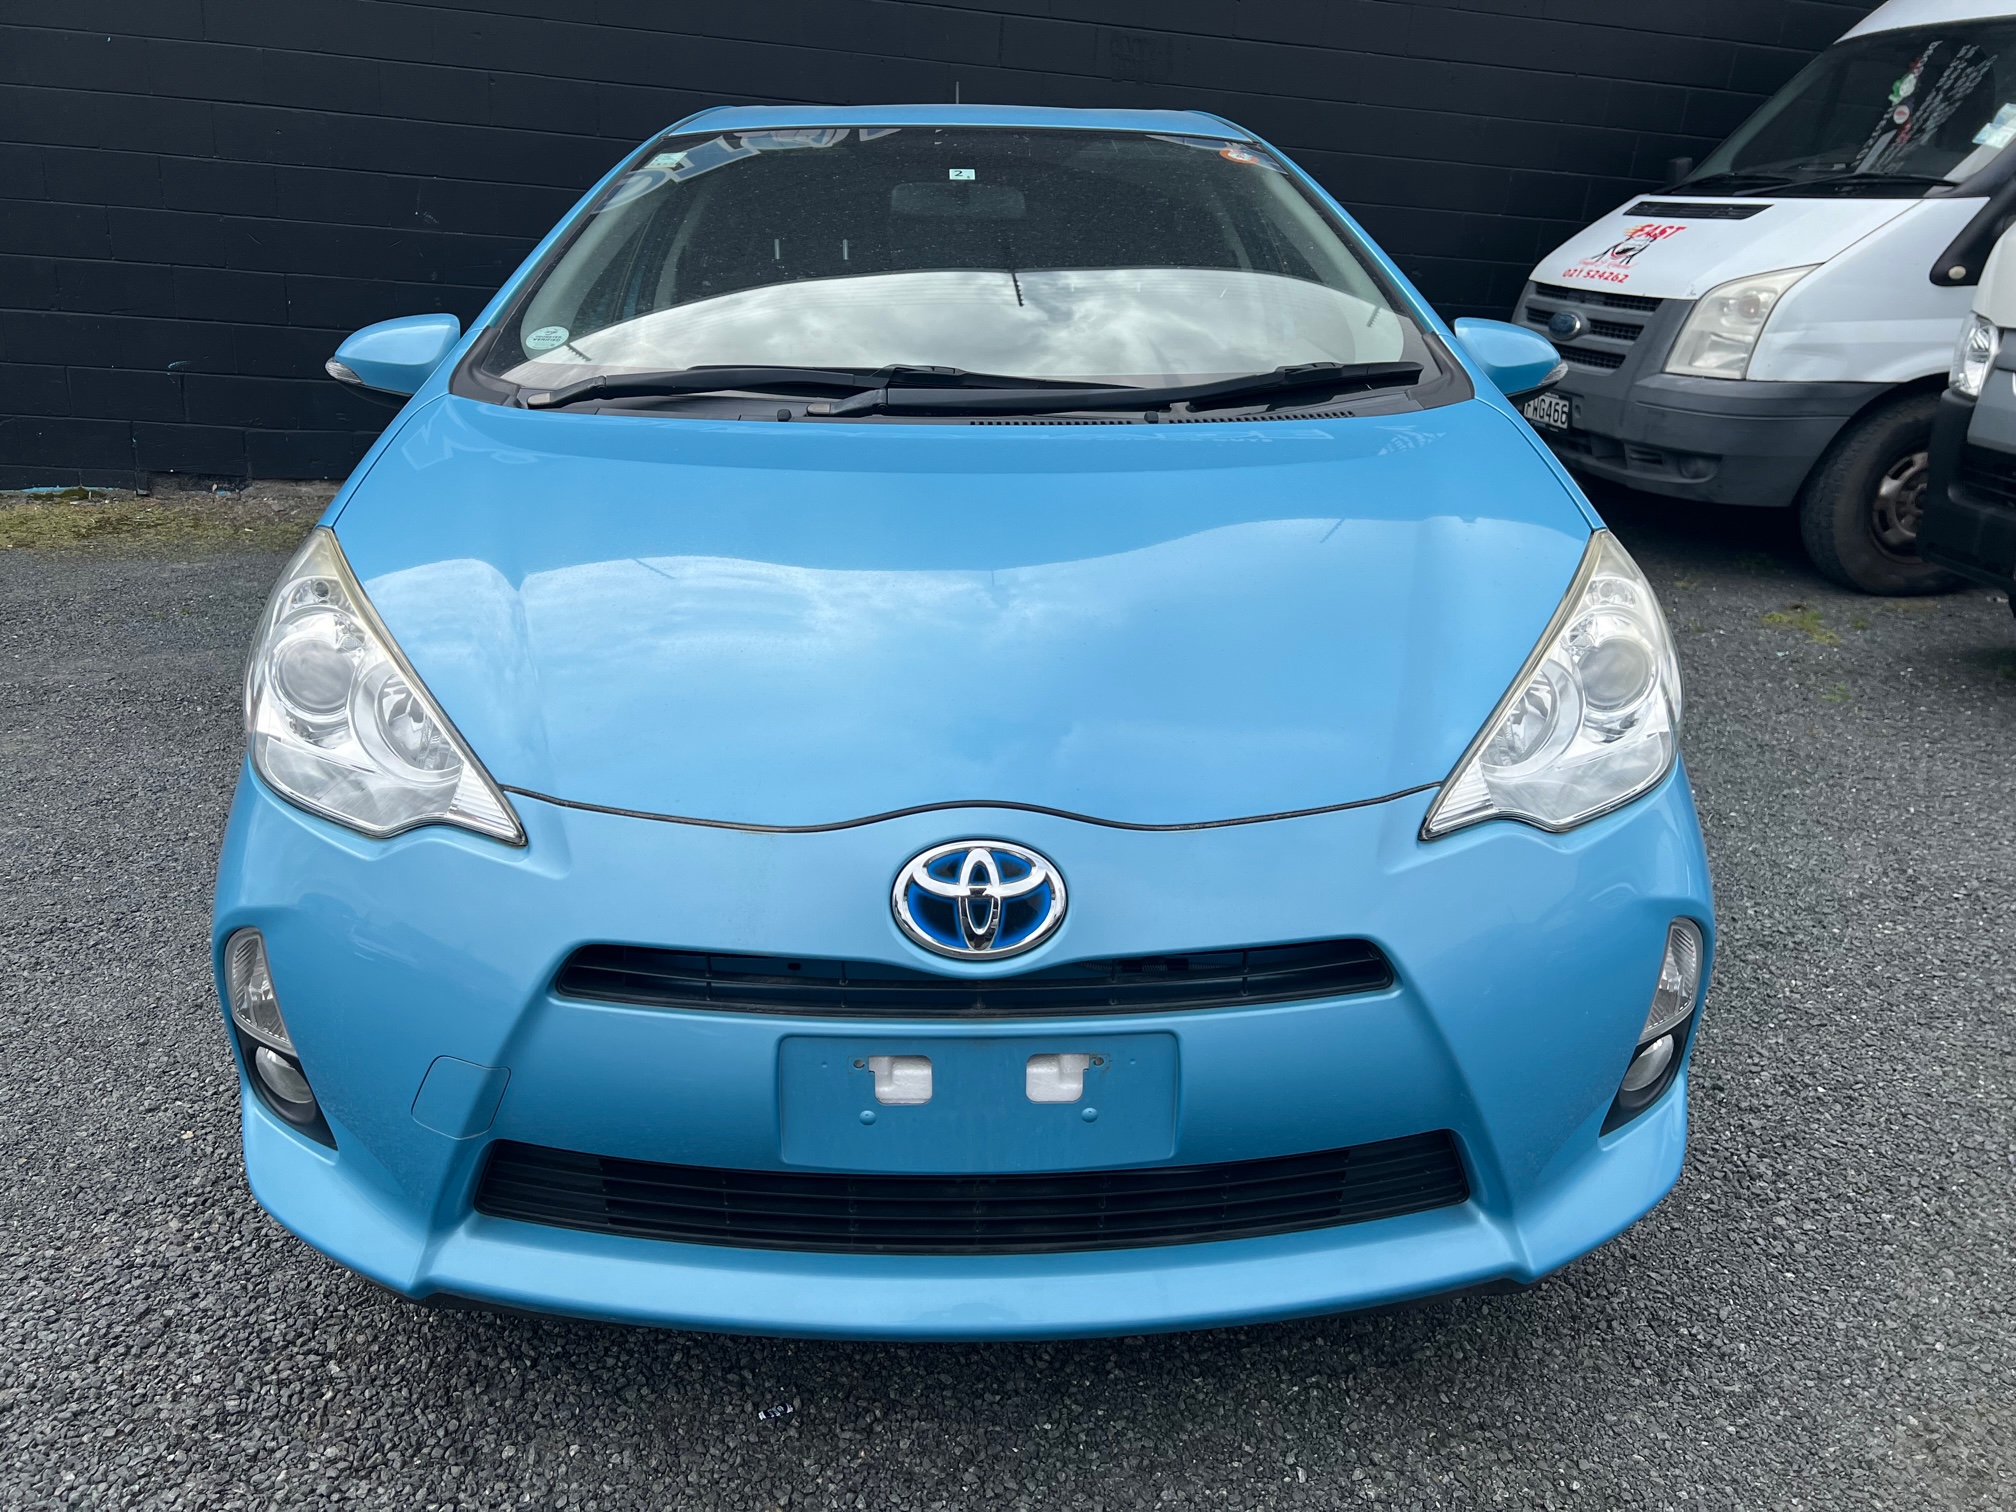 Toyota Aqua 2014 Image 3